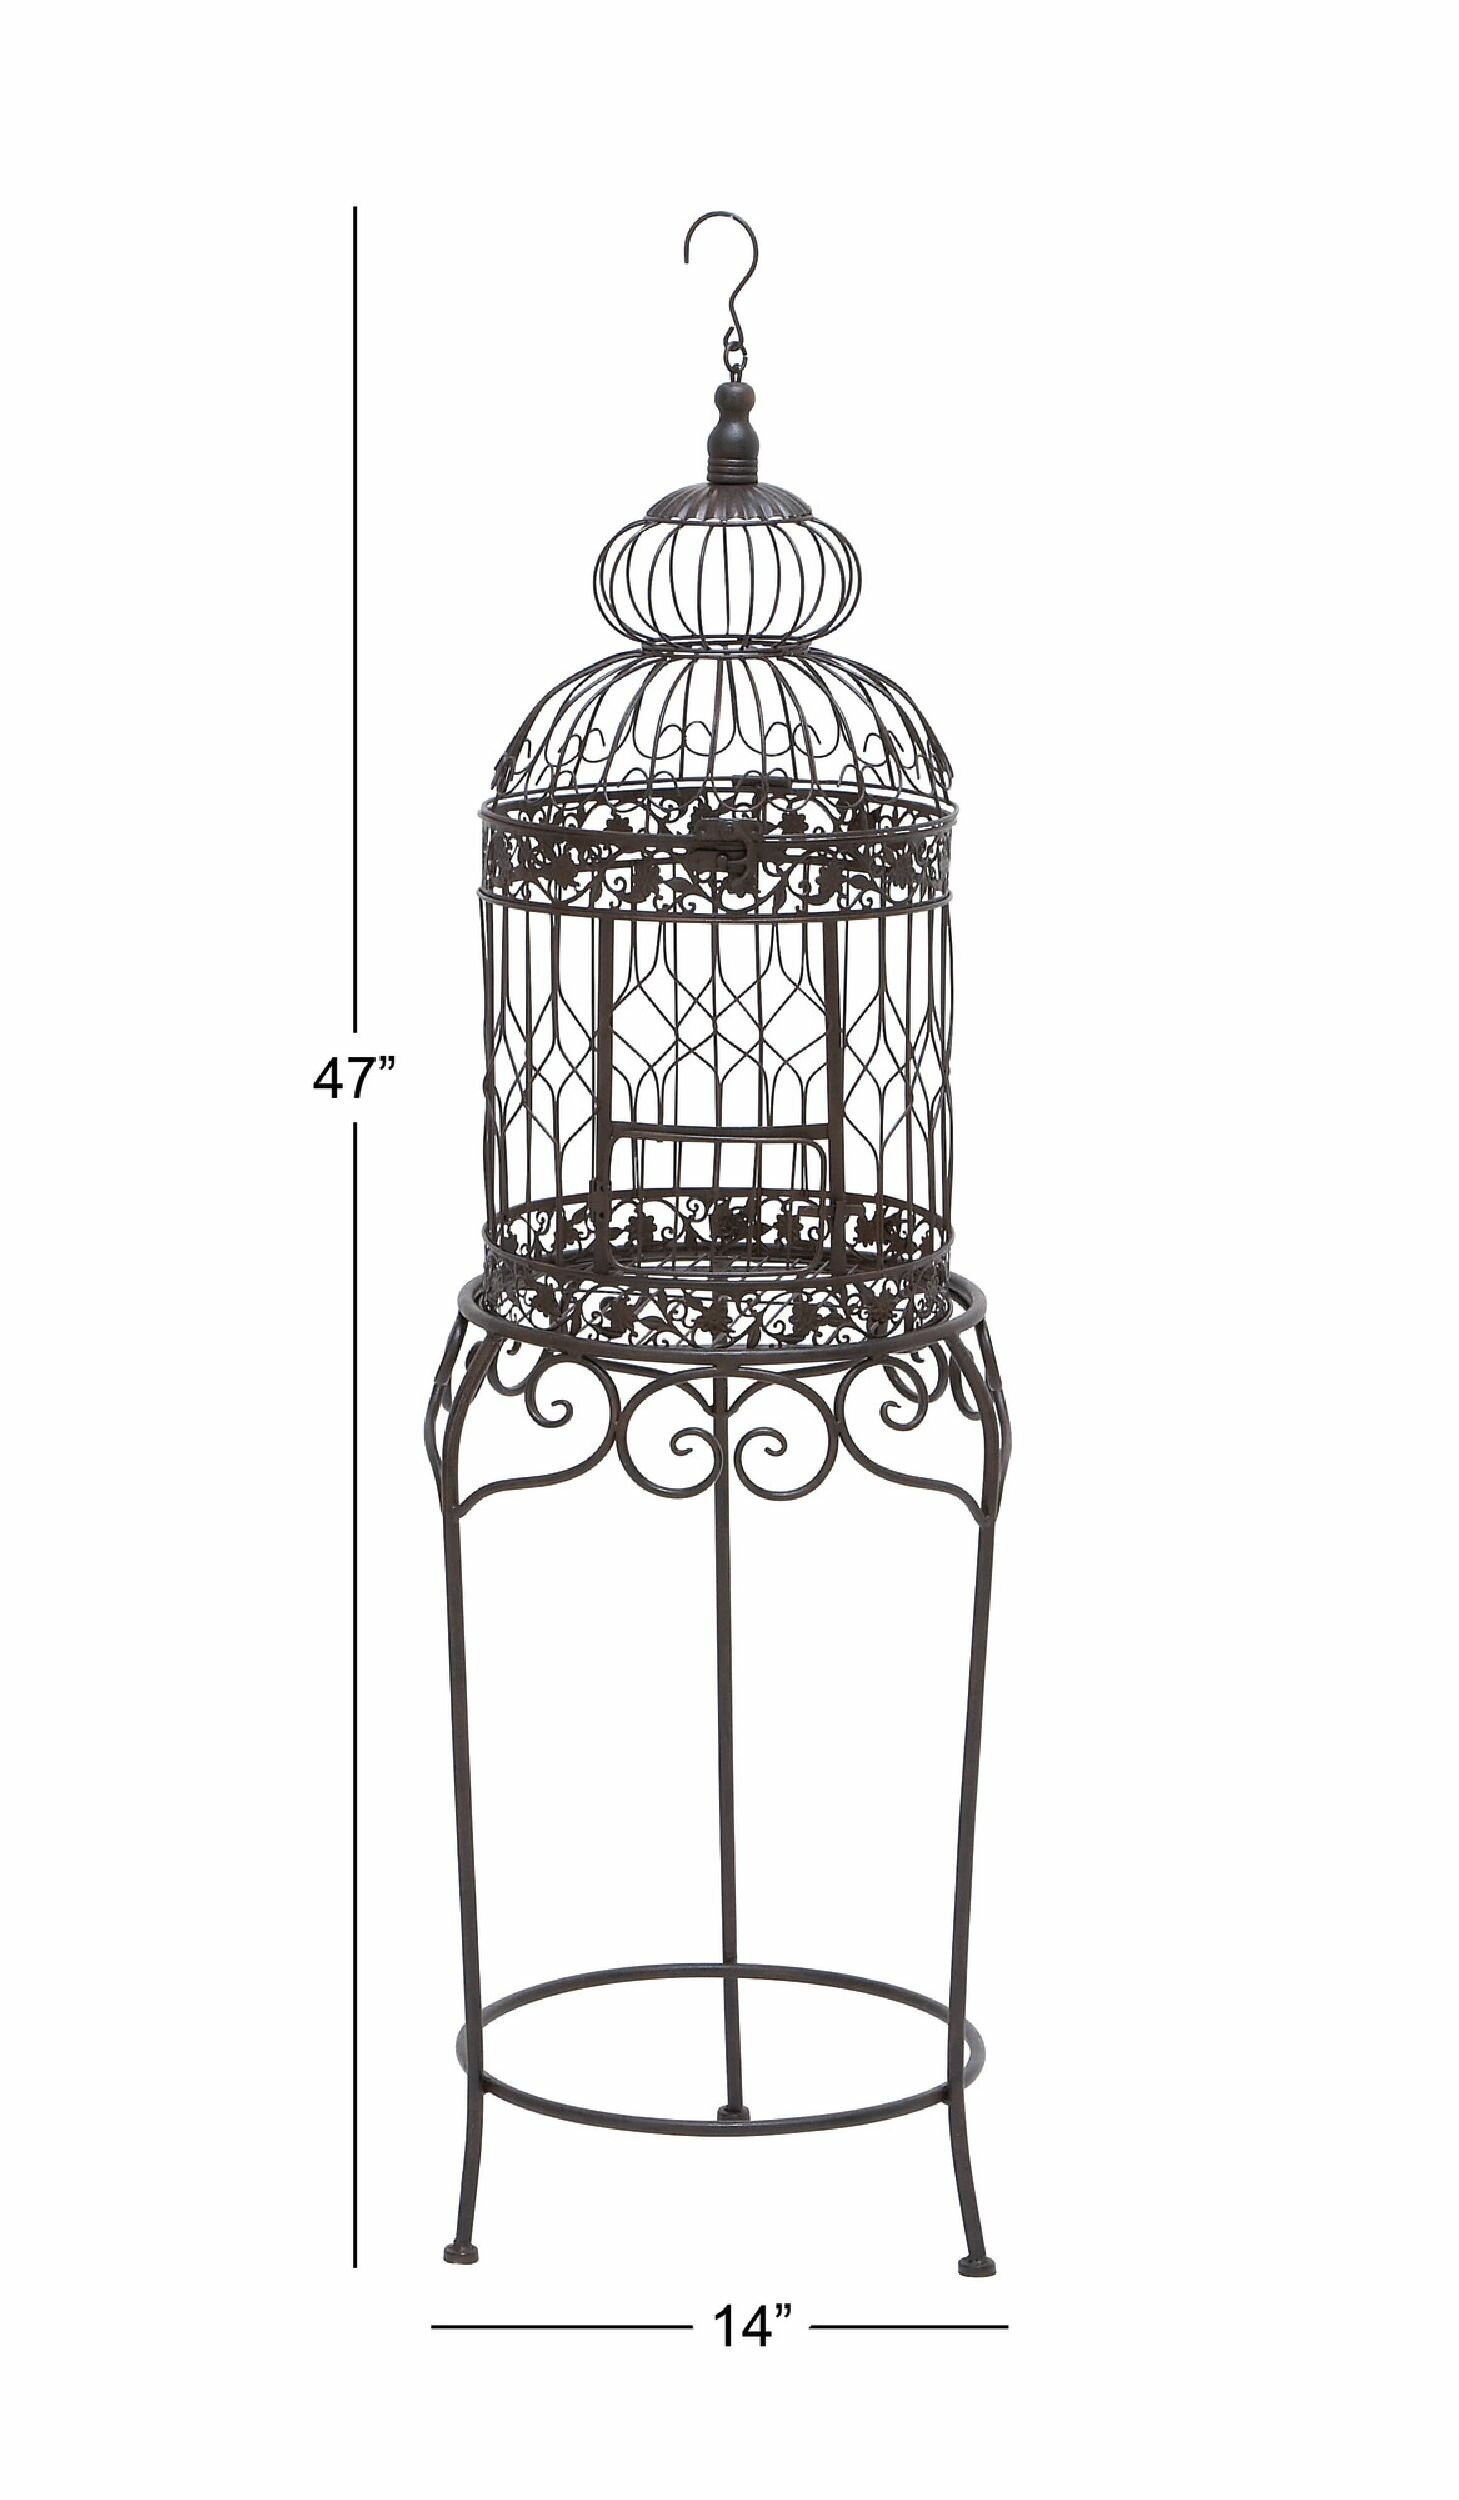 Woodland imports victorian style decorative bird cage